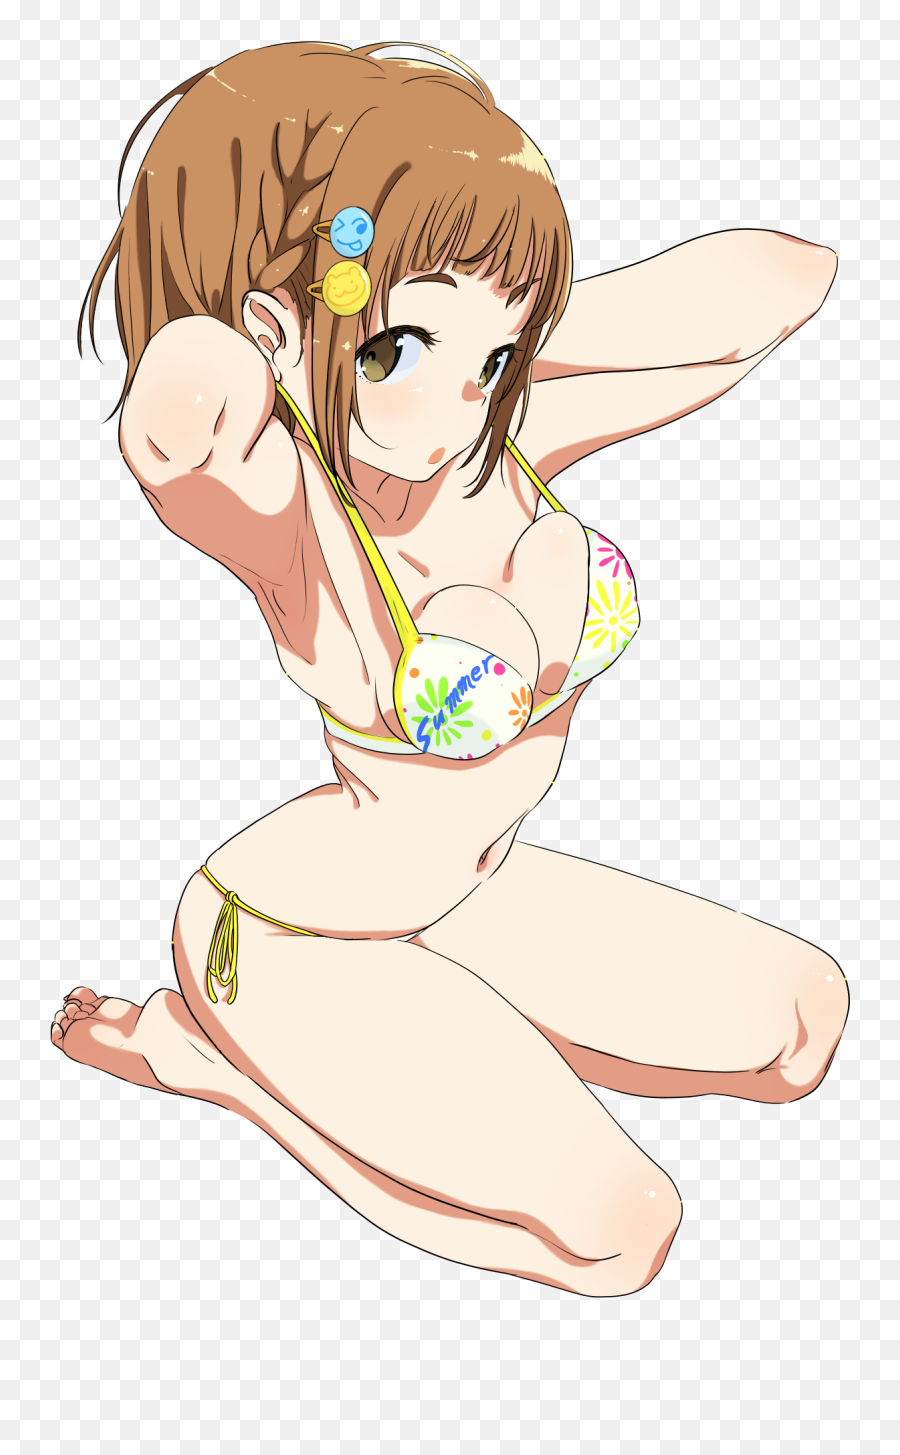 Kitami Yuzu The Email Anime Girl Bikini Transparent Png Free Transparent Png Images Pngaaa Com